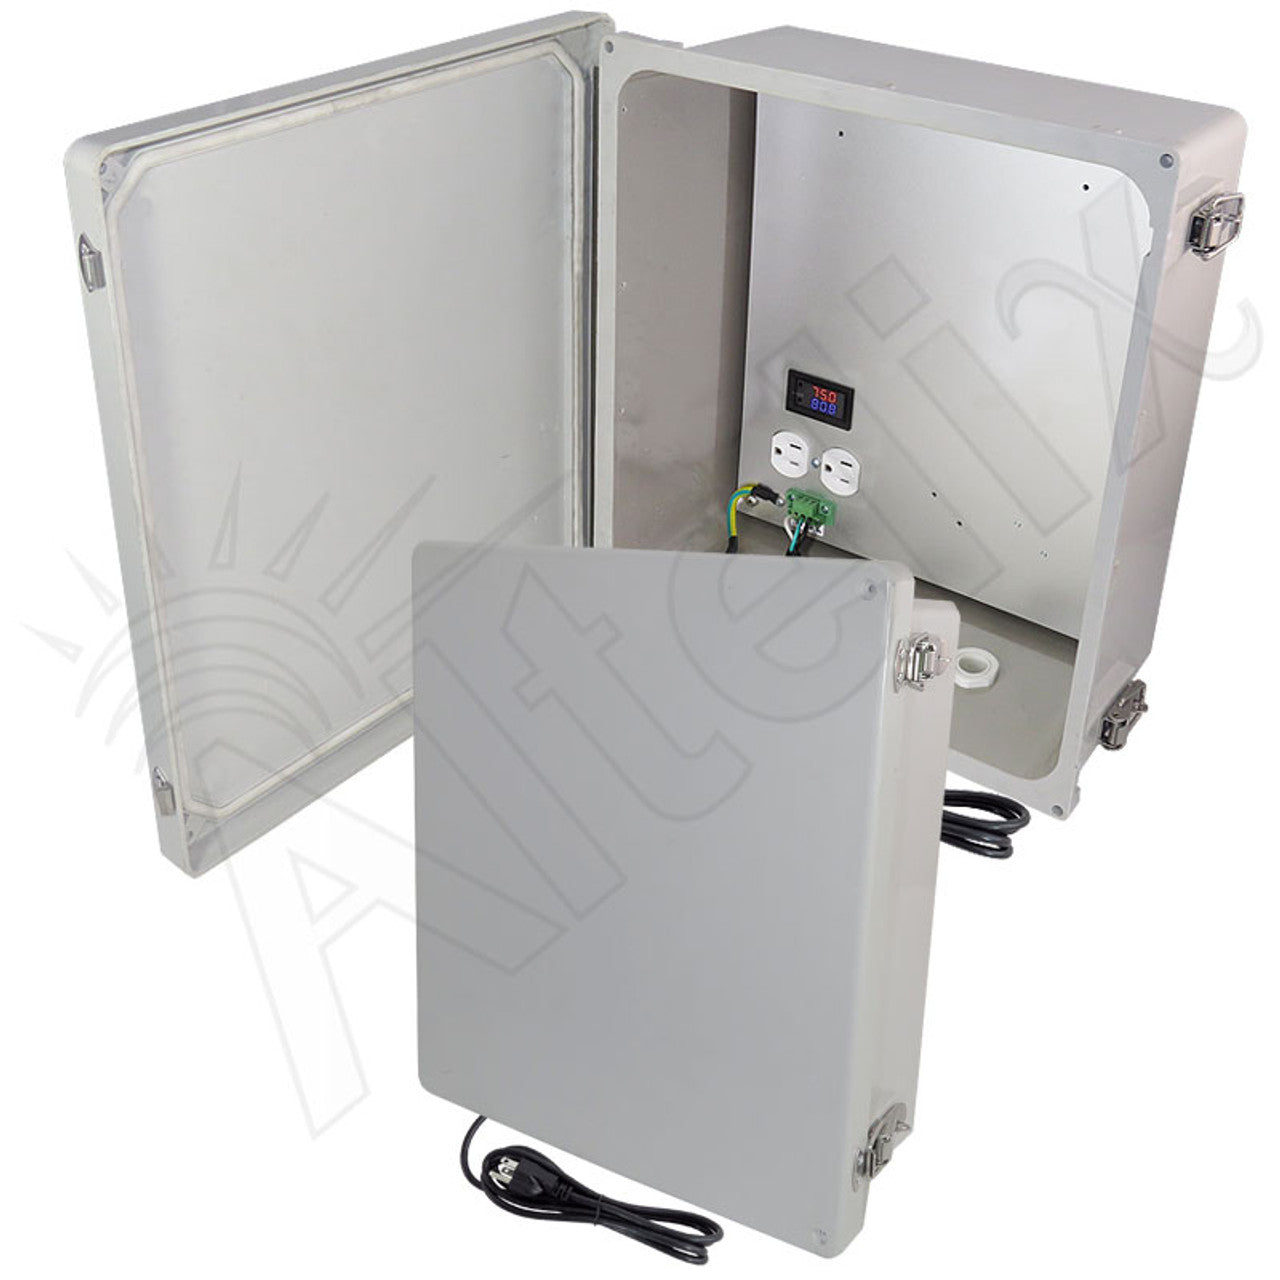 Altelix Fiberglass Weatherproof Heated NEMA Enclosure with 120 VAC Outlets, Power Cord & 200W Heater with Digital Temperature Controller-1